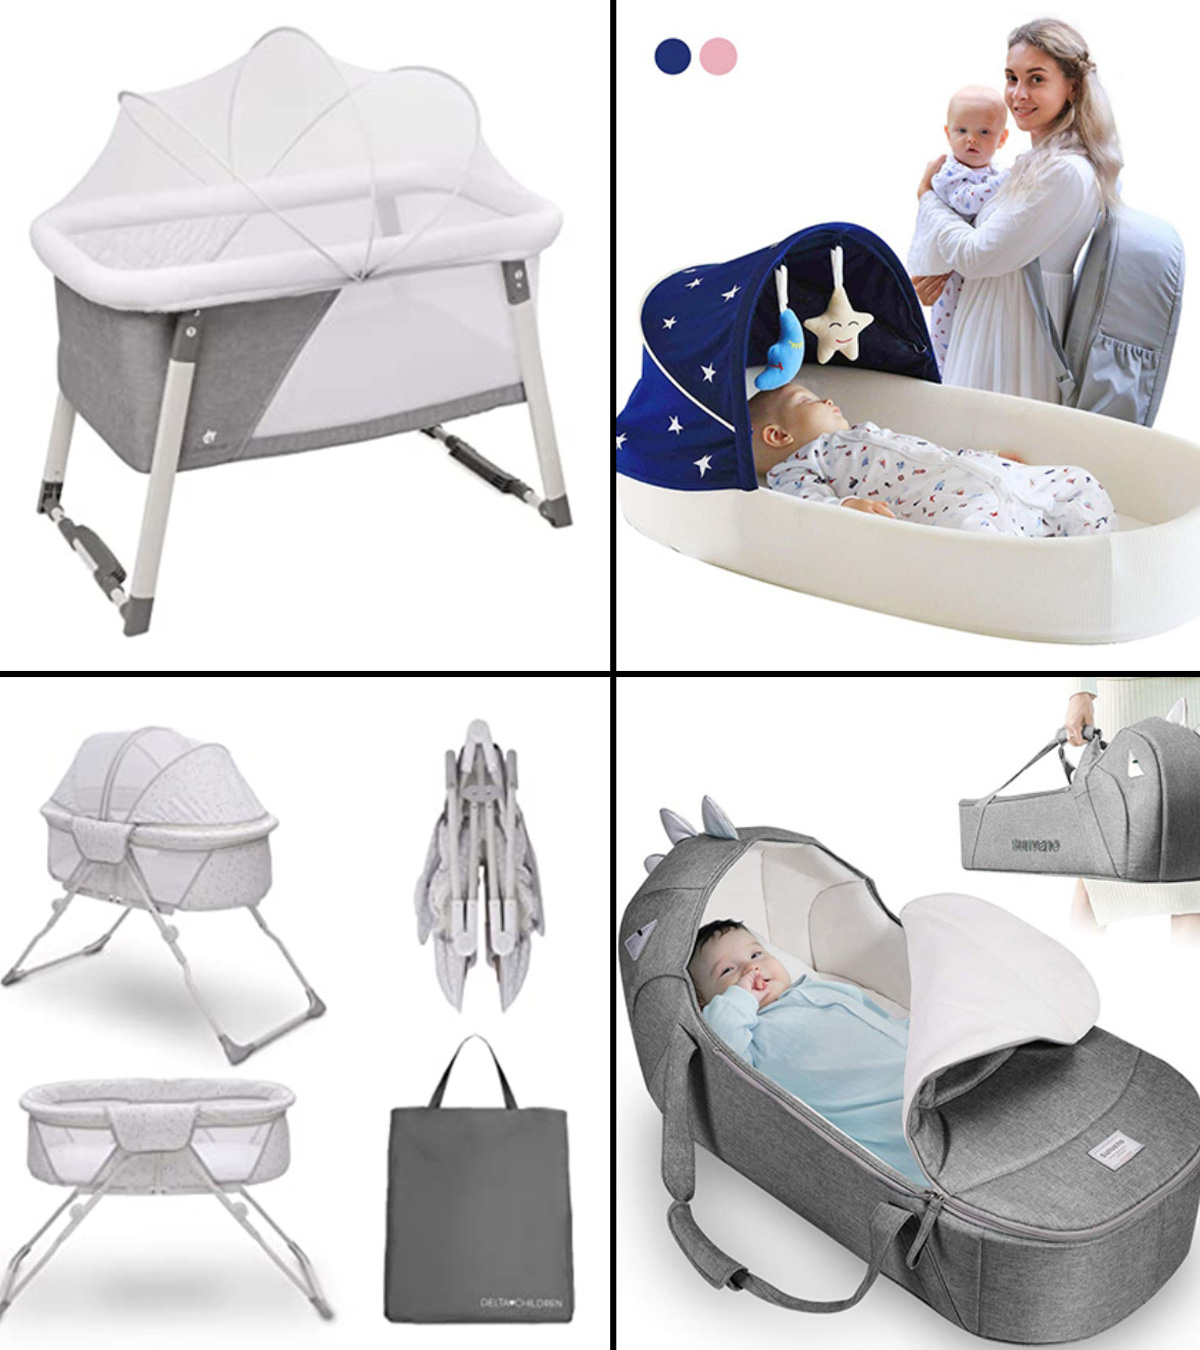 https://www.momjunction.com/wp-content/uploads/2020/06/Best-Baby-Travel-Beds1.jpg